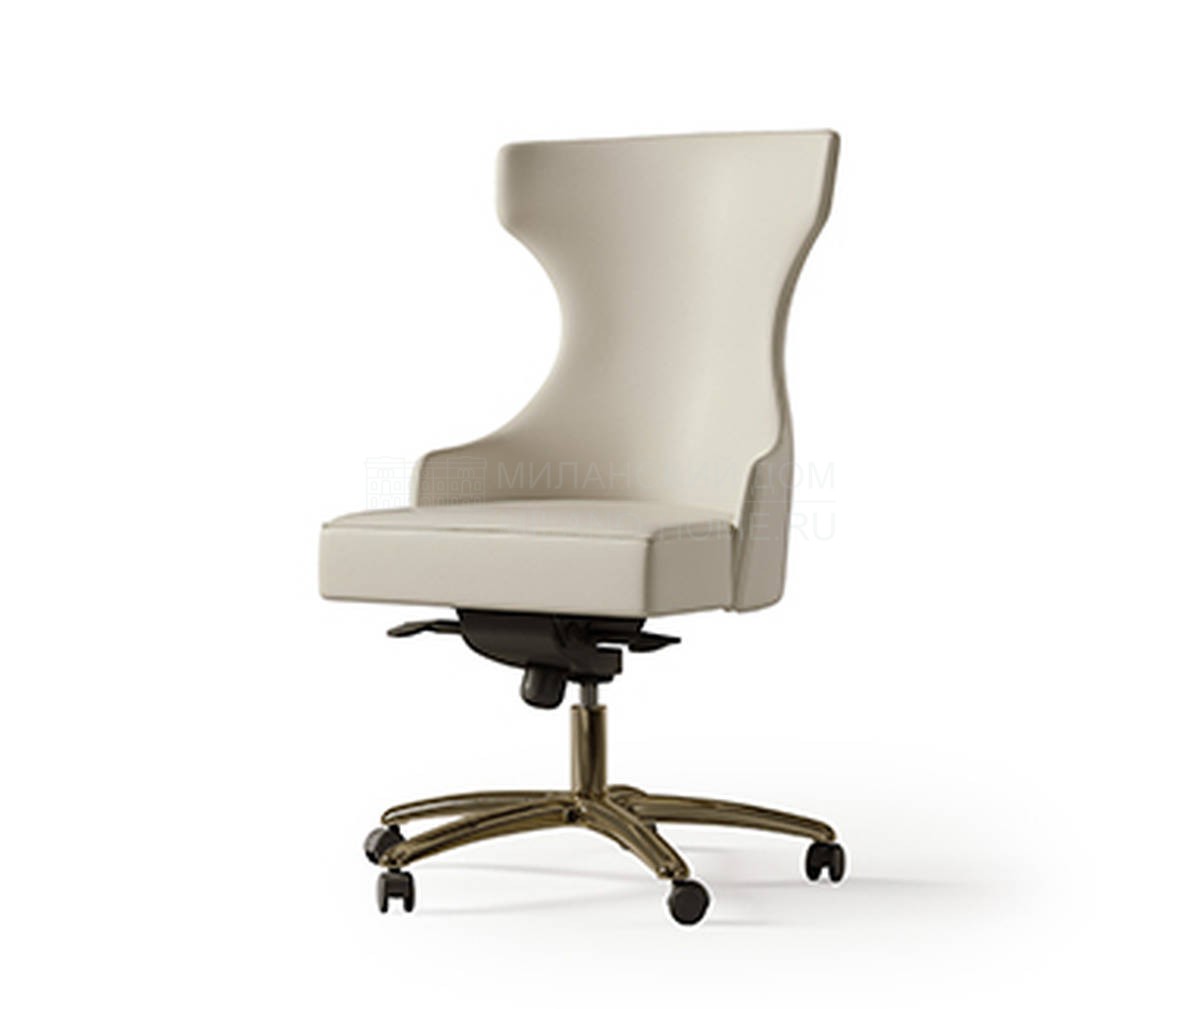 Рабочий стул Hug armchair / art. 697 AS из Италии фабрики BIZZOTTO